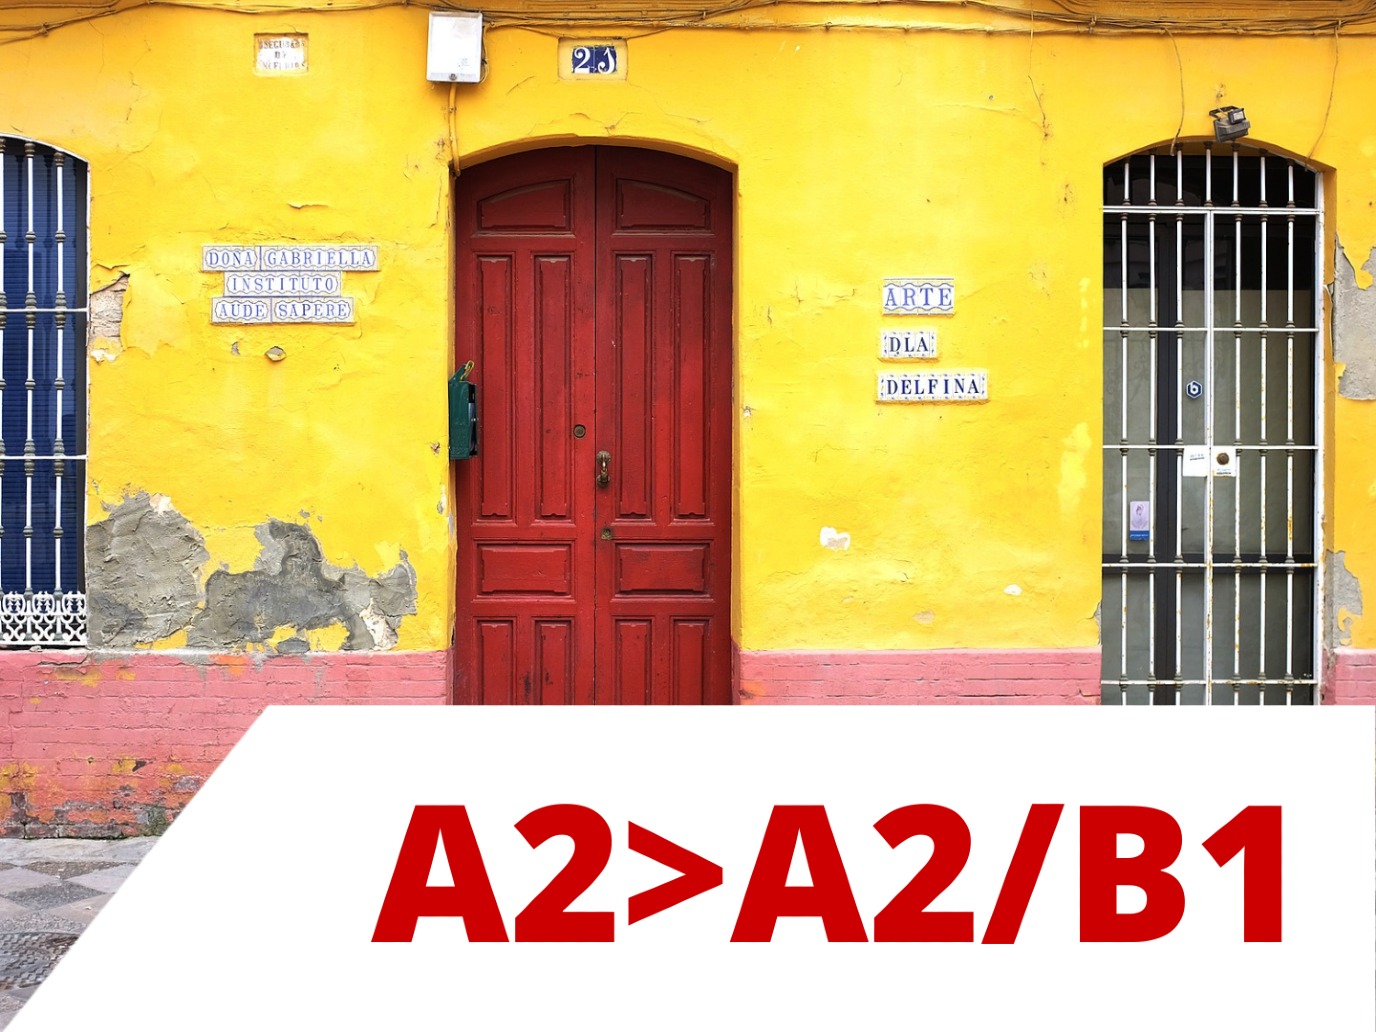 Spanish A2>A2/B1